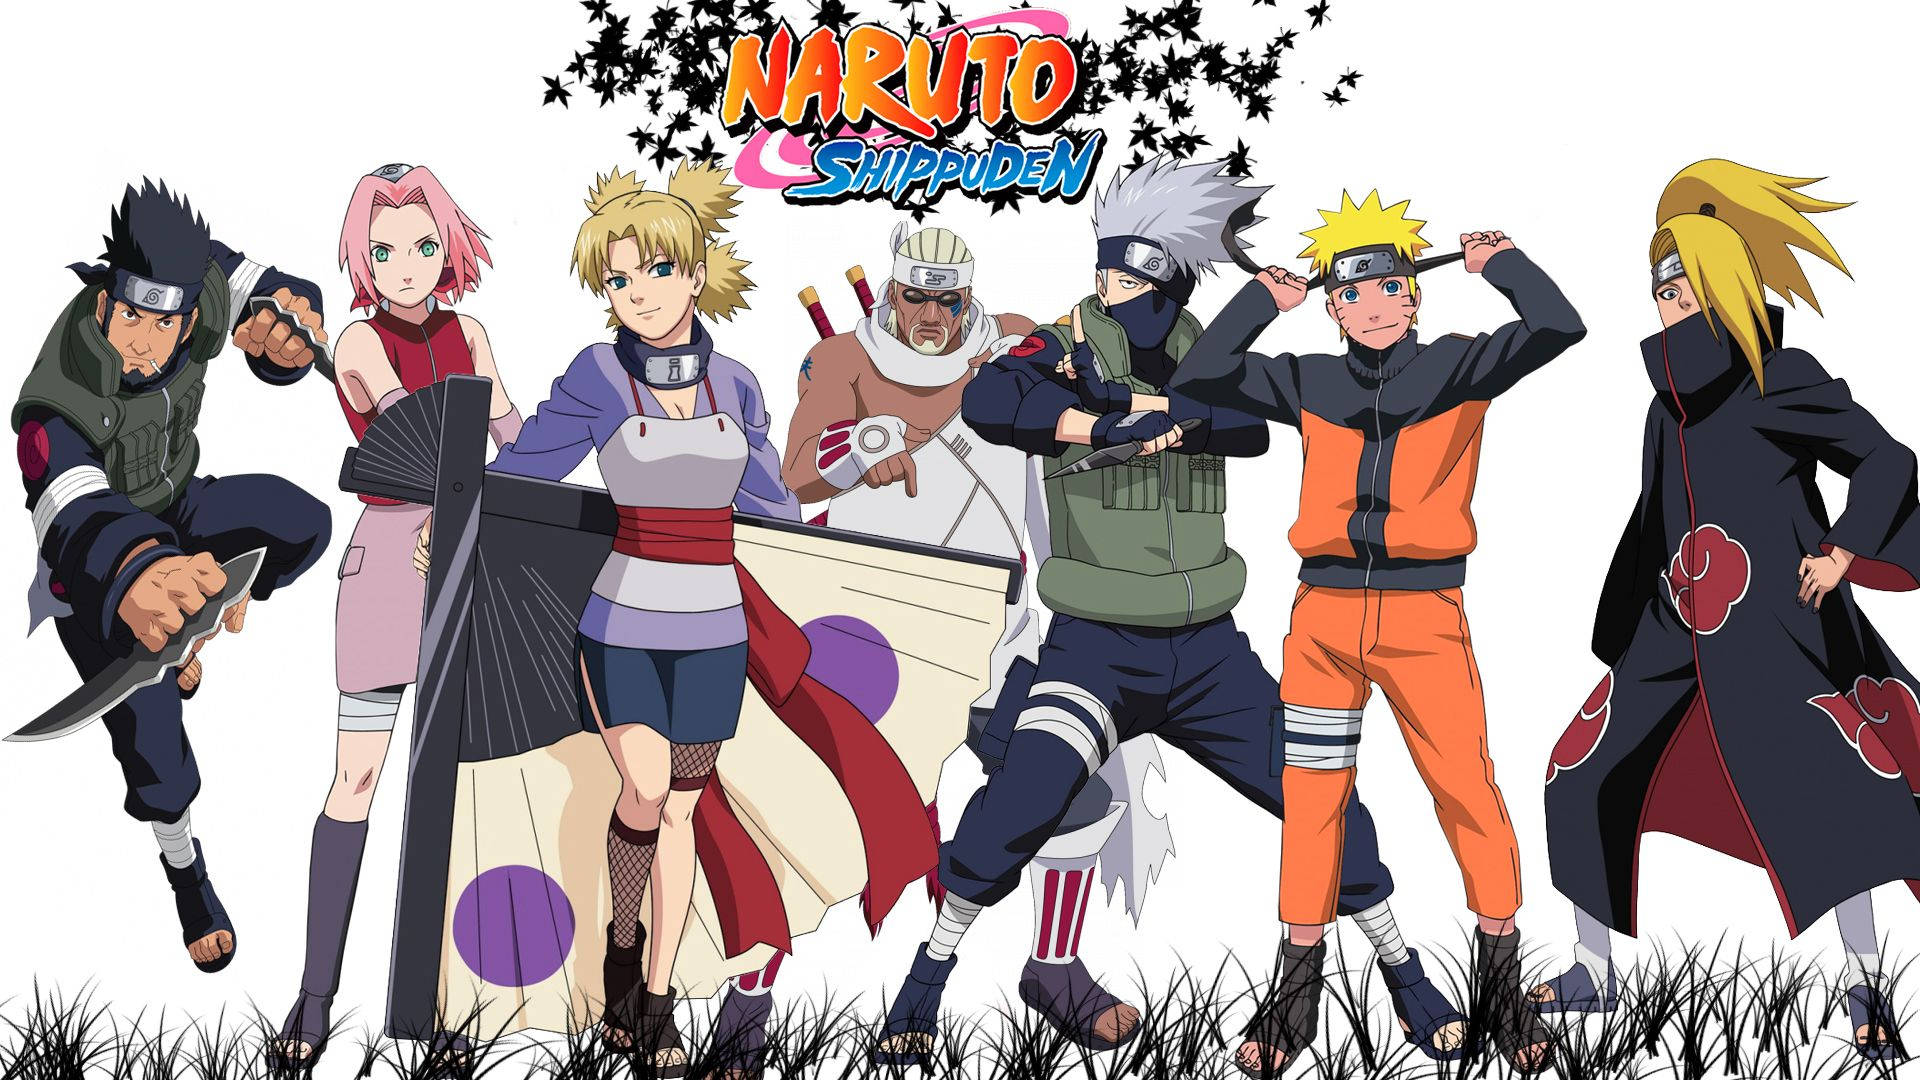 Naruto Shippuden Powerful Ninjas Poster Background